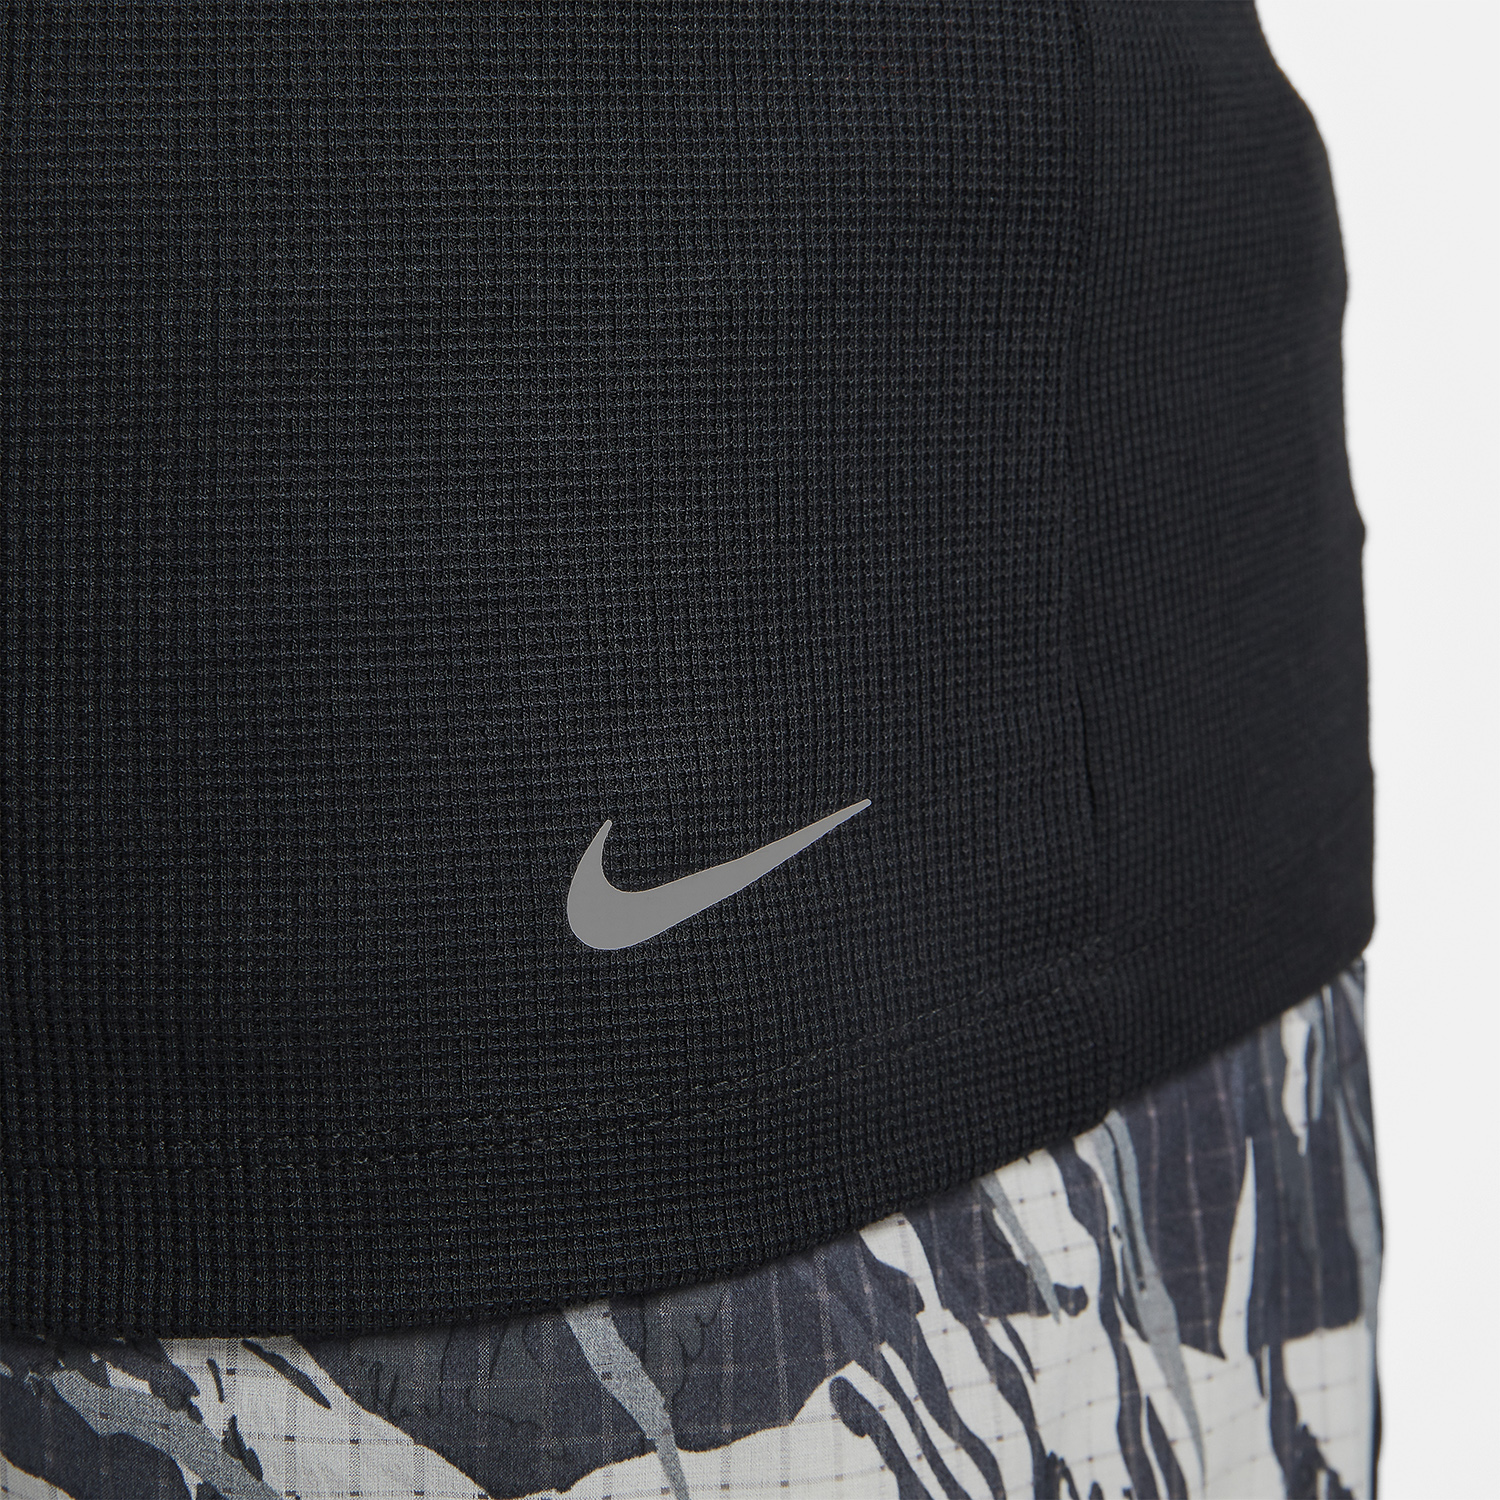 Nike Trail Dri-FIT Swoosh Camisa - Black/White